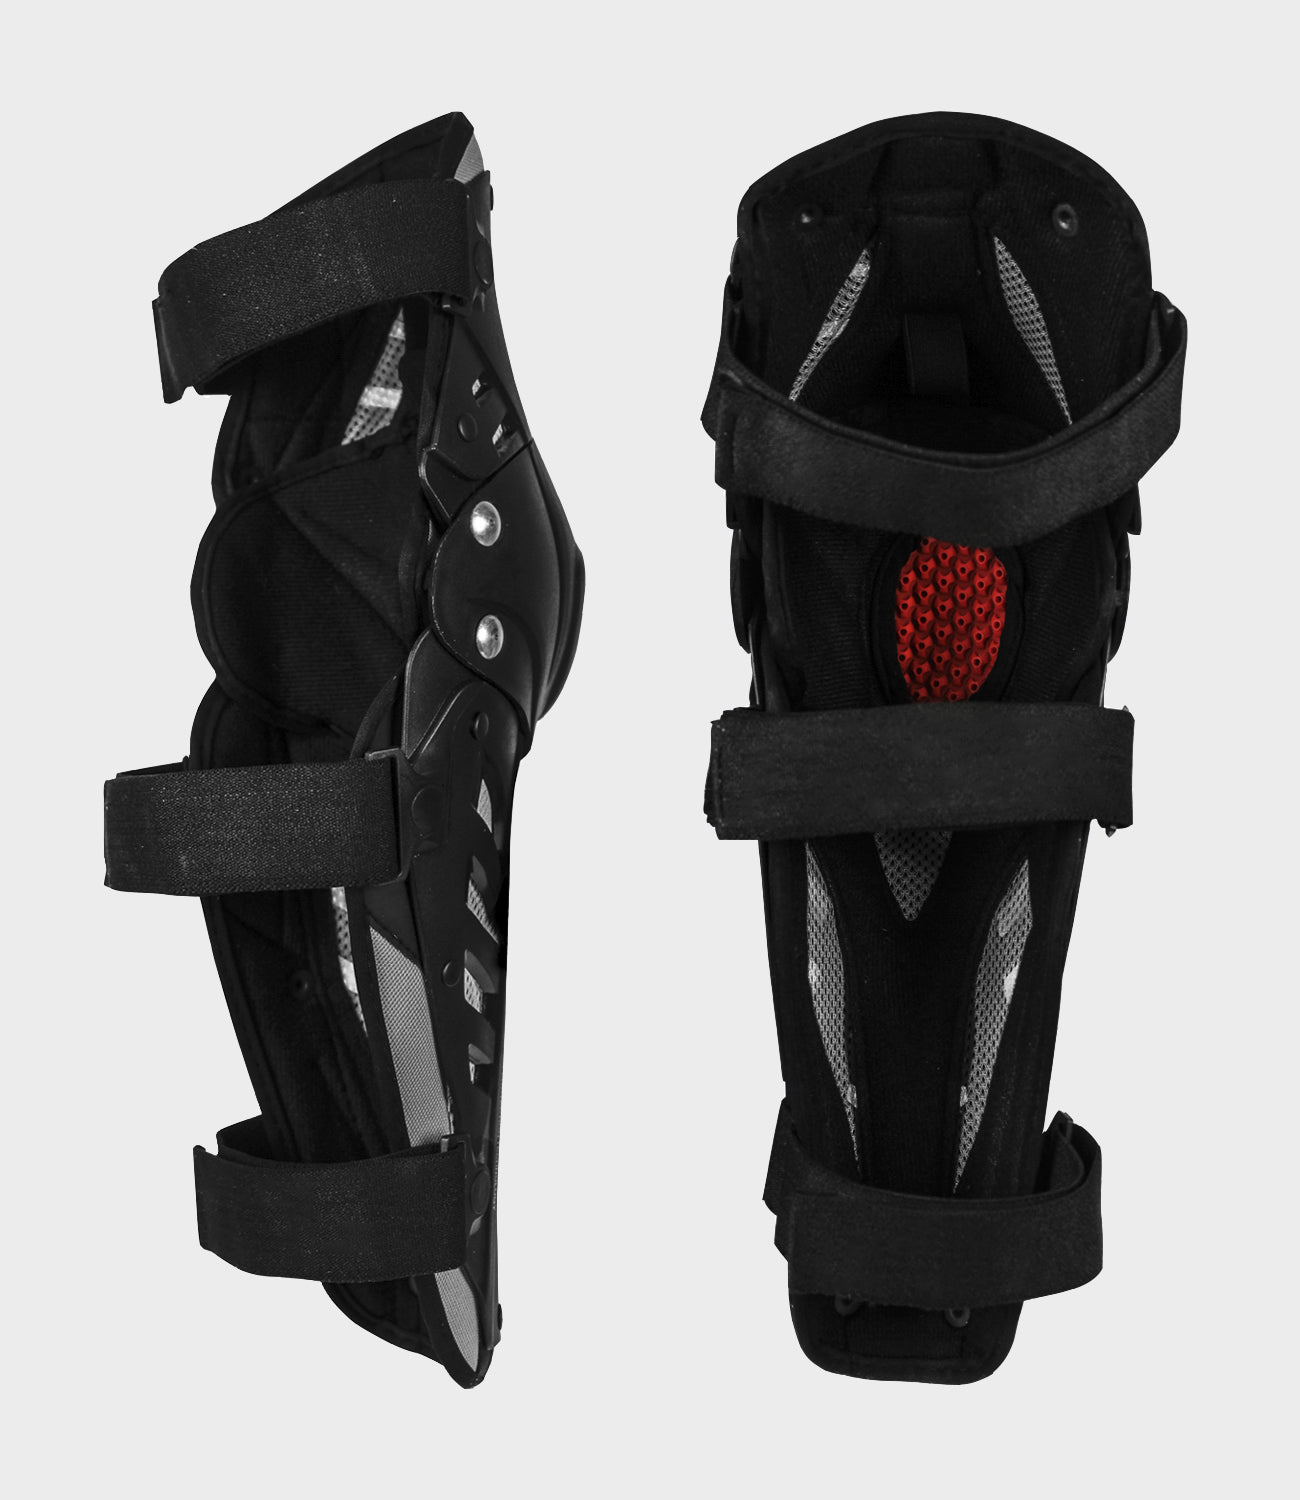 MOTO TORQUE Bionic Knee Guard X Protect